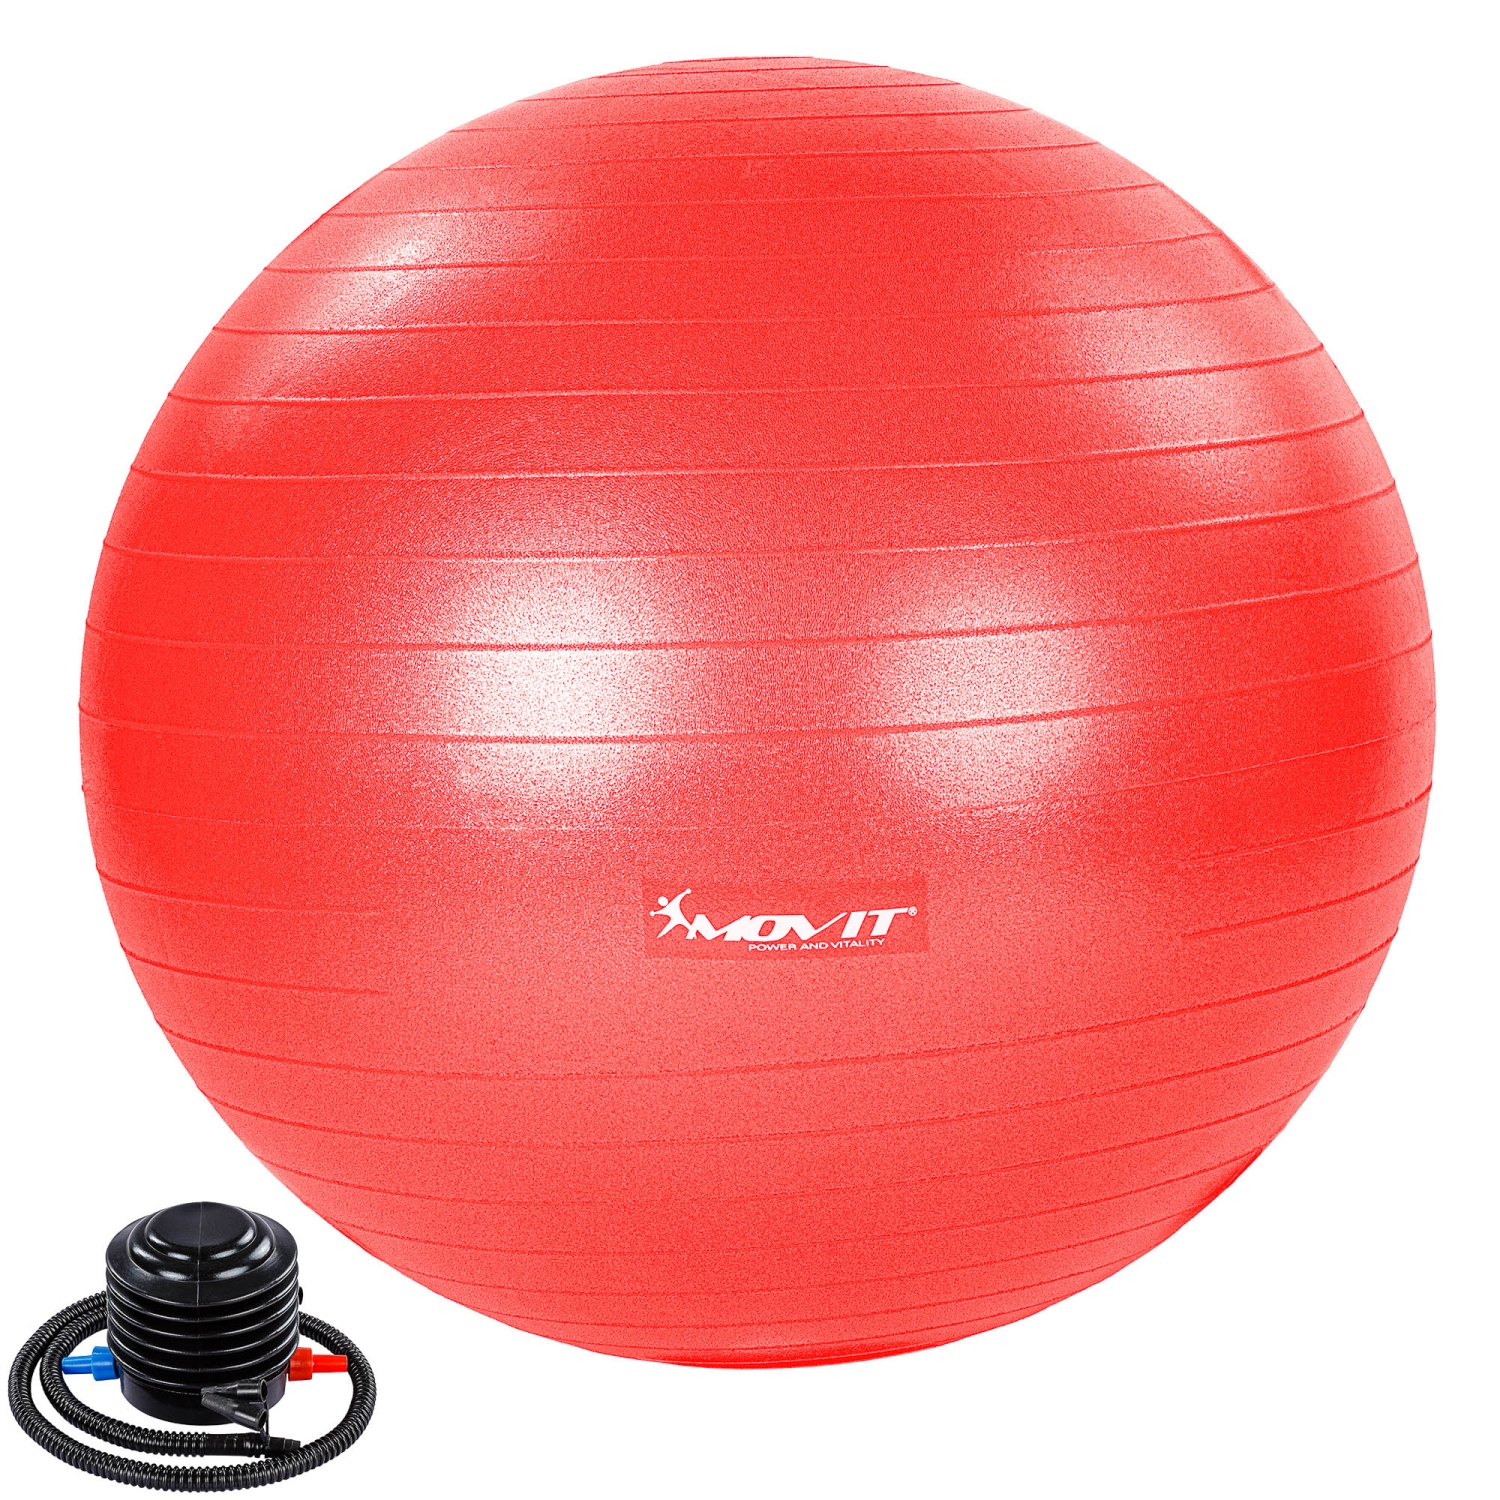 Yoga bal – Pilates bal – Fitness bal – 55 cm – Inclusief pomp – Rood